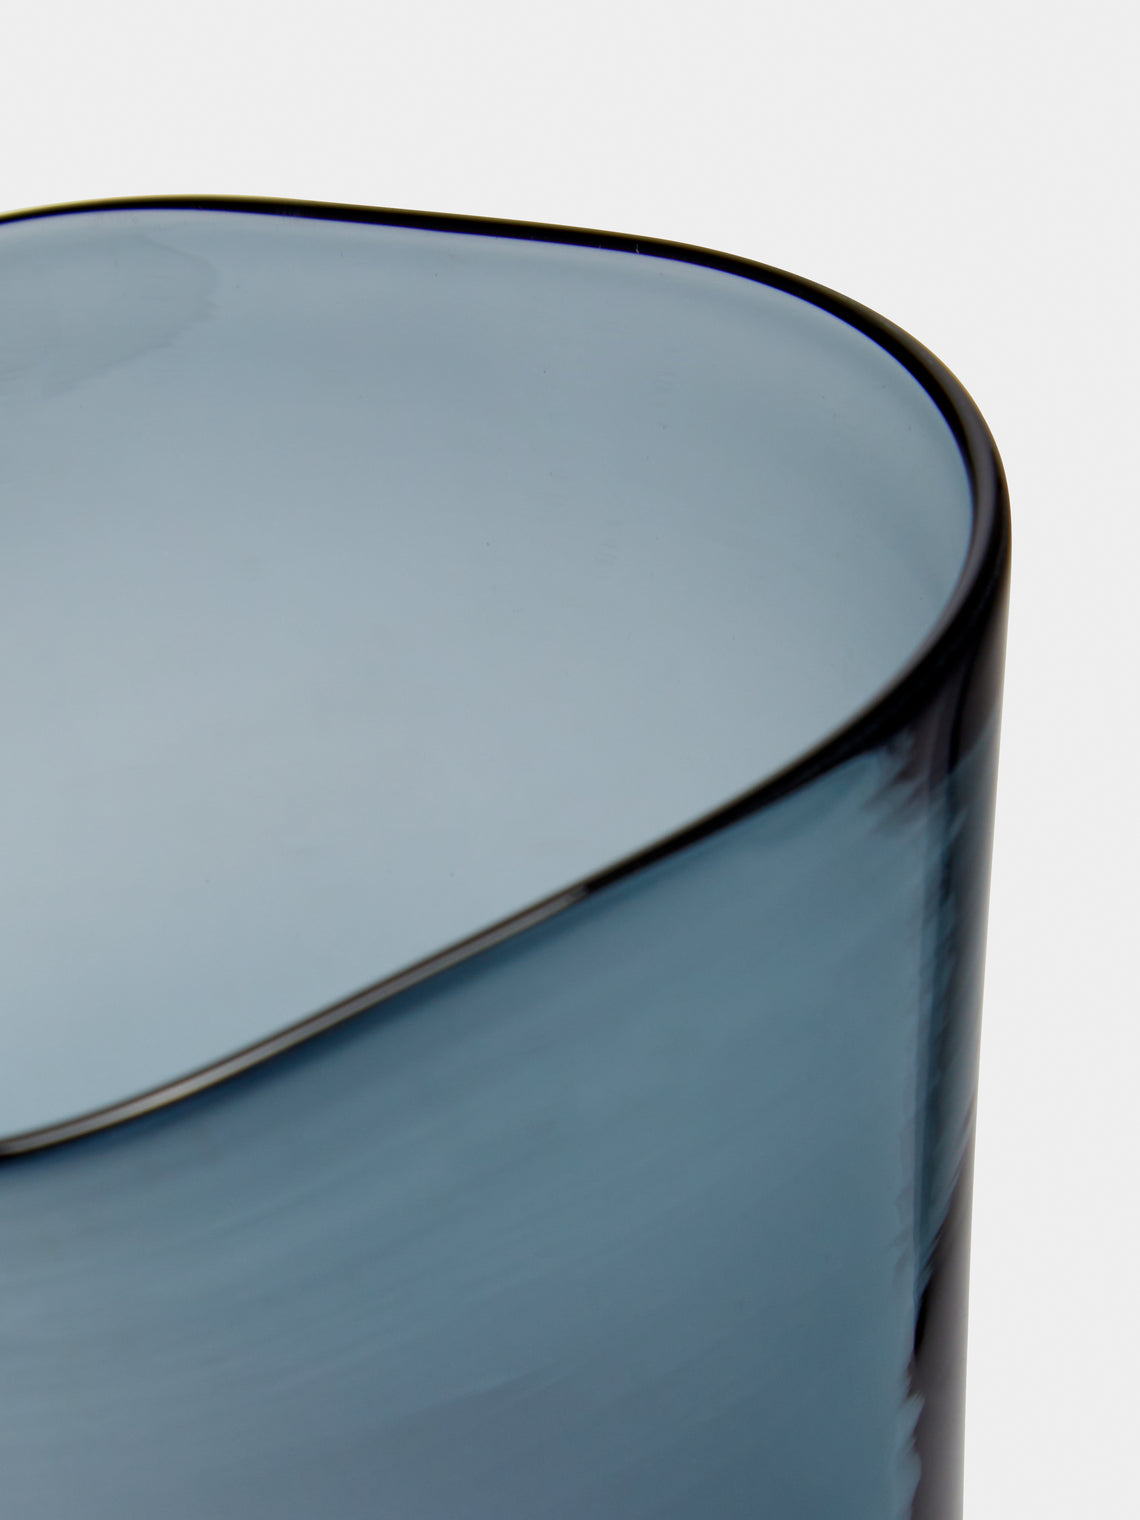 Micheluzzi Glass - Mosso Oceano Hand-Blown Murano Glass Tumbler - Blue - ABASK